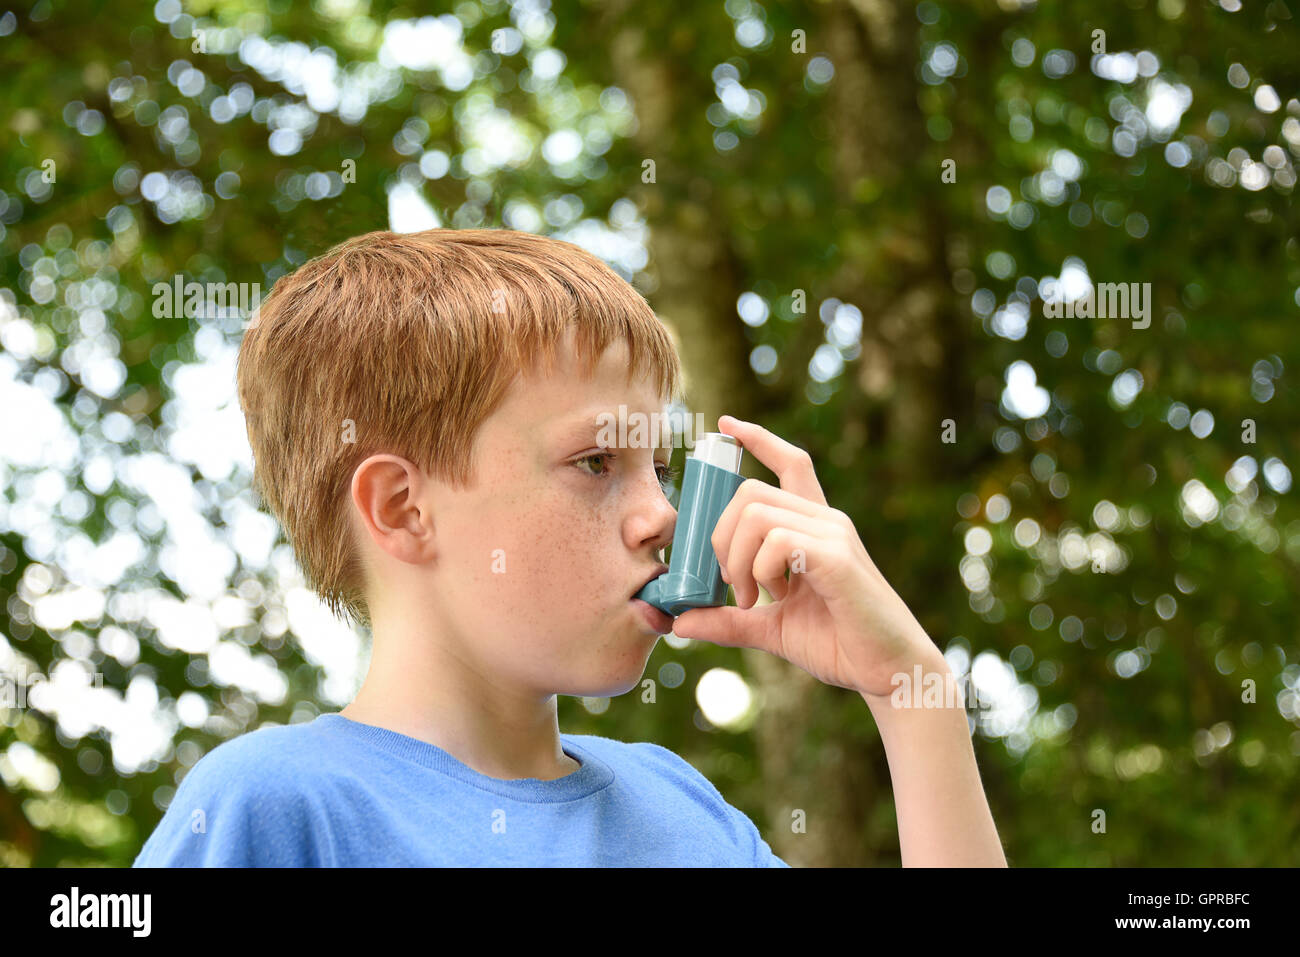 Boy with Asthma inhaler Stock Photo